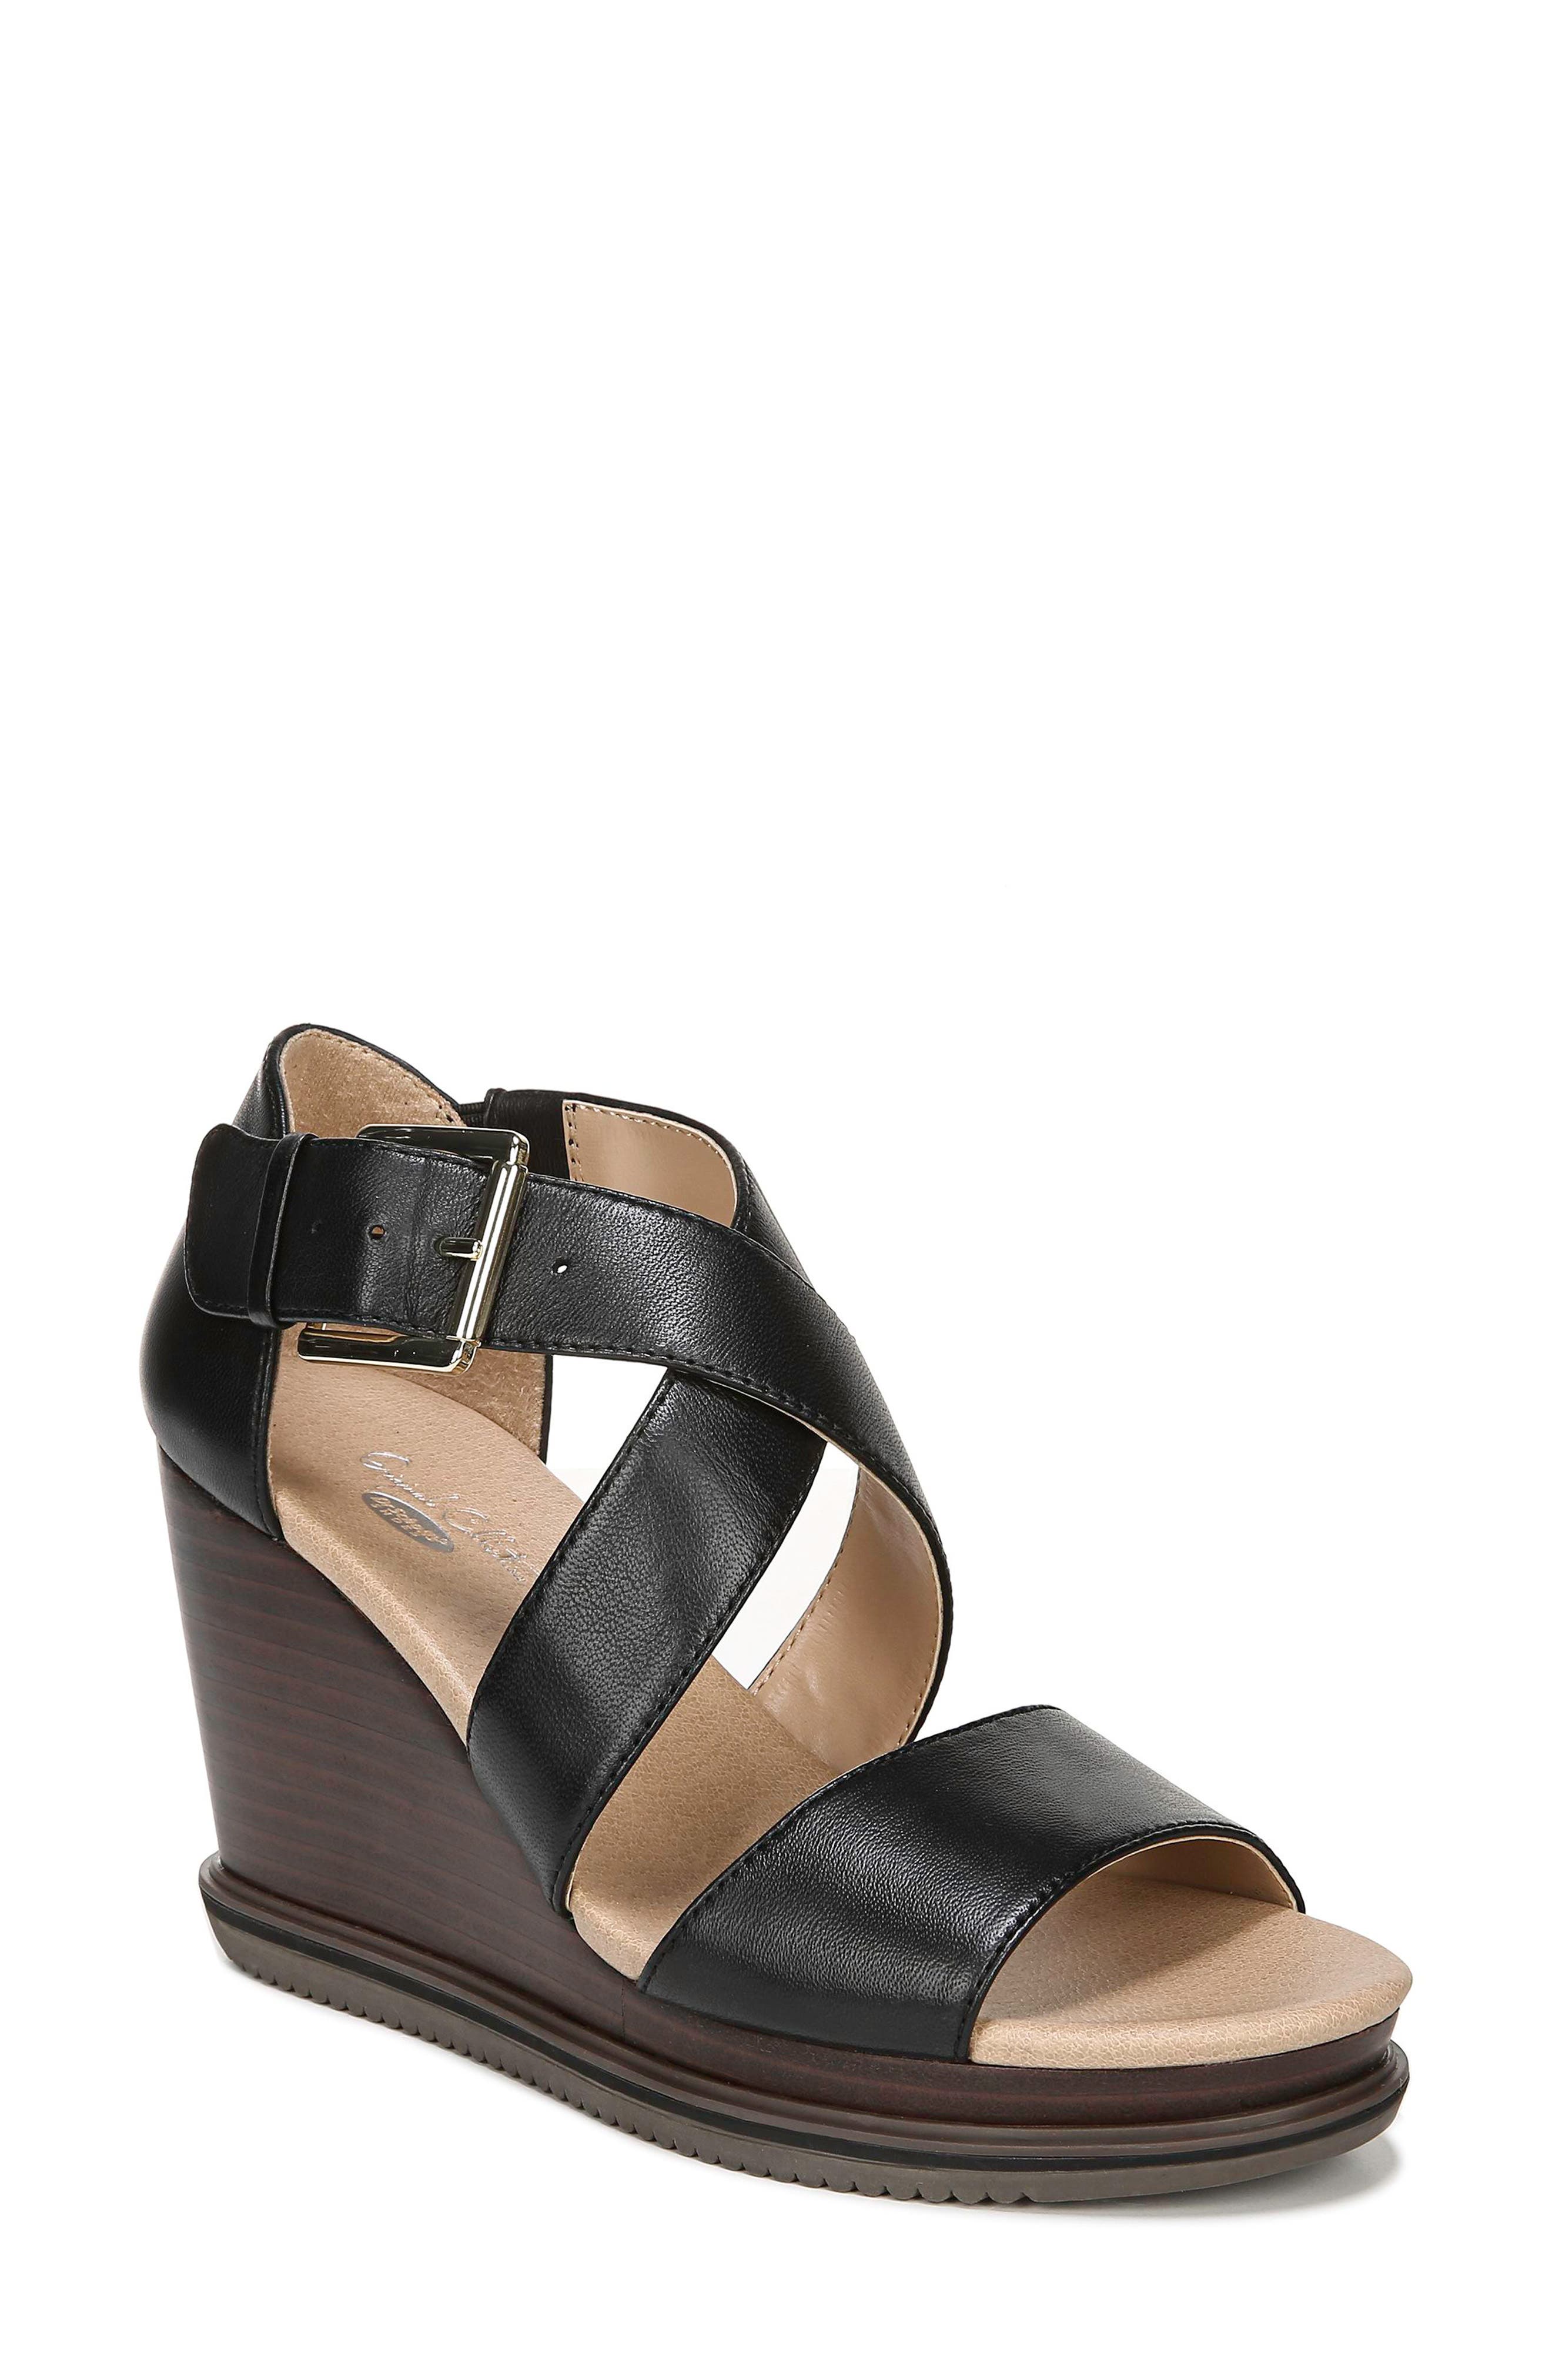 UPC 742976000058 product image for Women's Dr. Scholl's Sweet Escape Wedge Sandal, Size 6.5 M - Black | upcitemdb.com